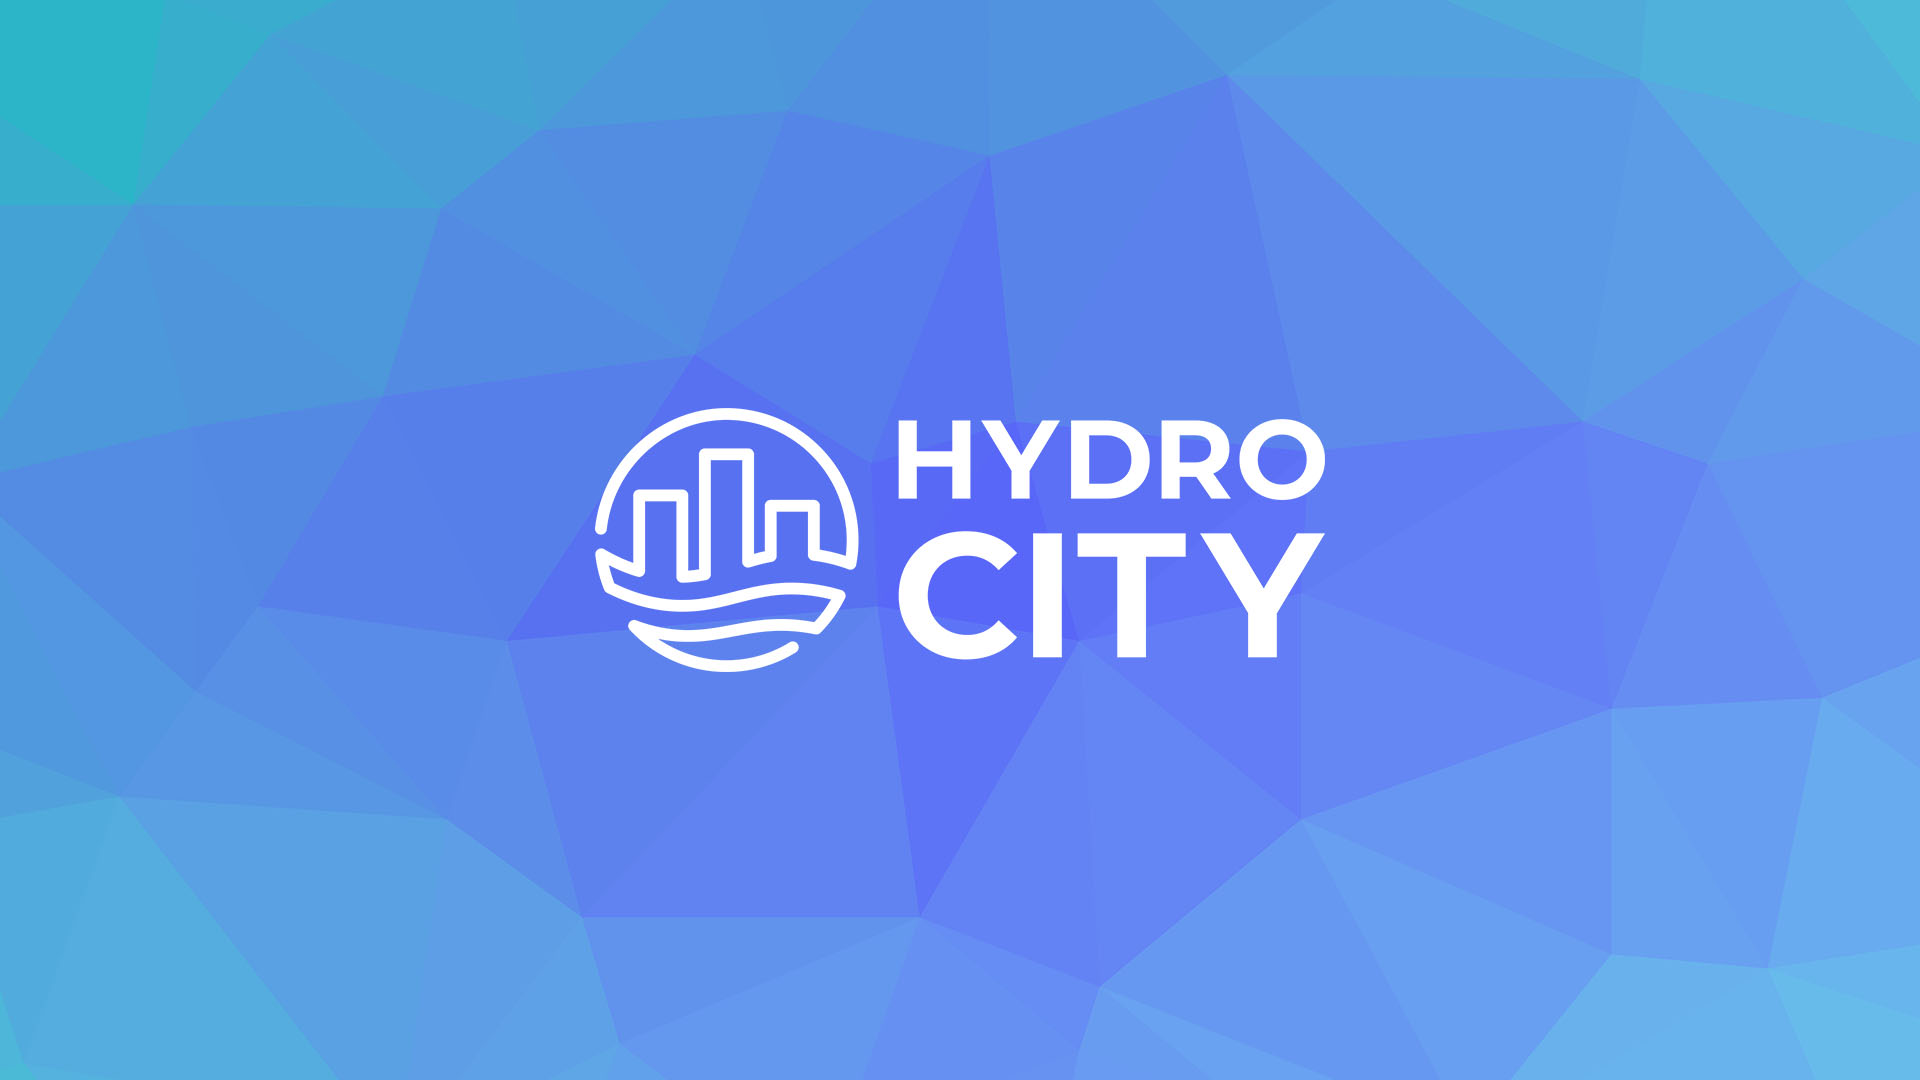 Motion Design Capstone 2020 | Hydro City